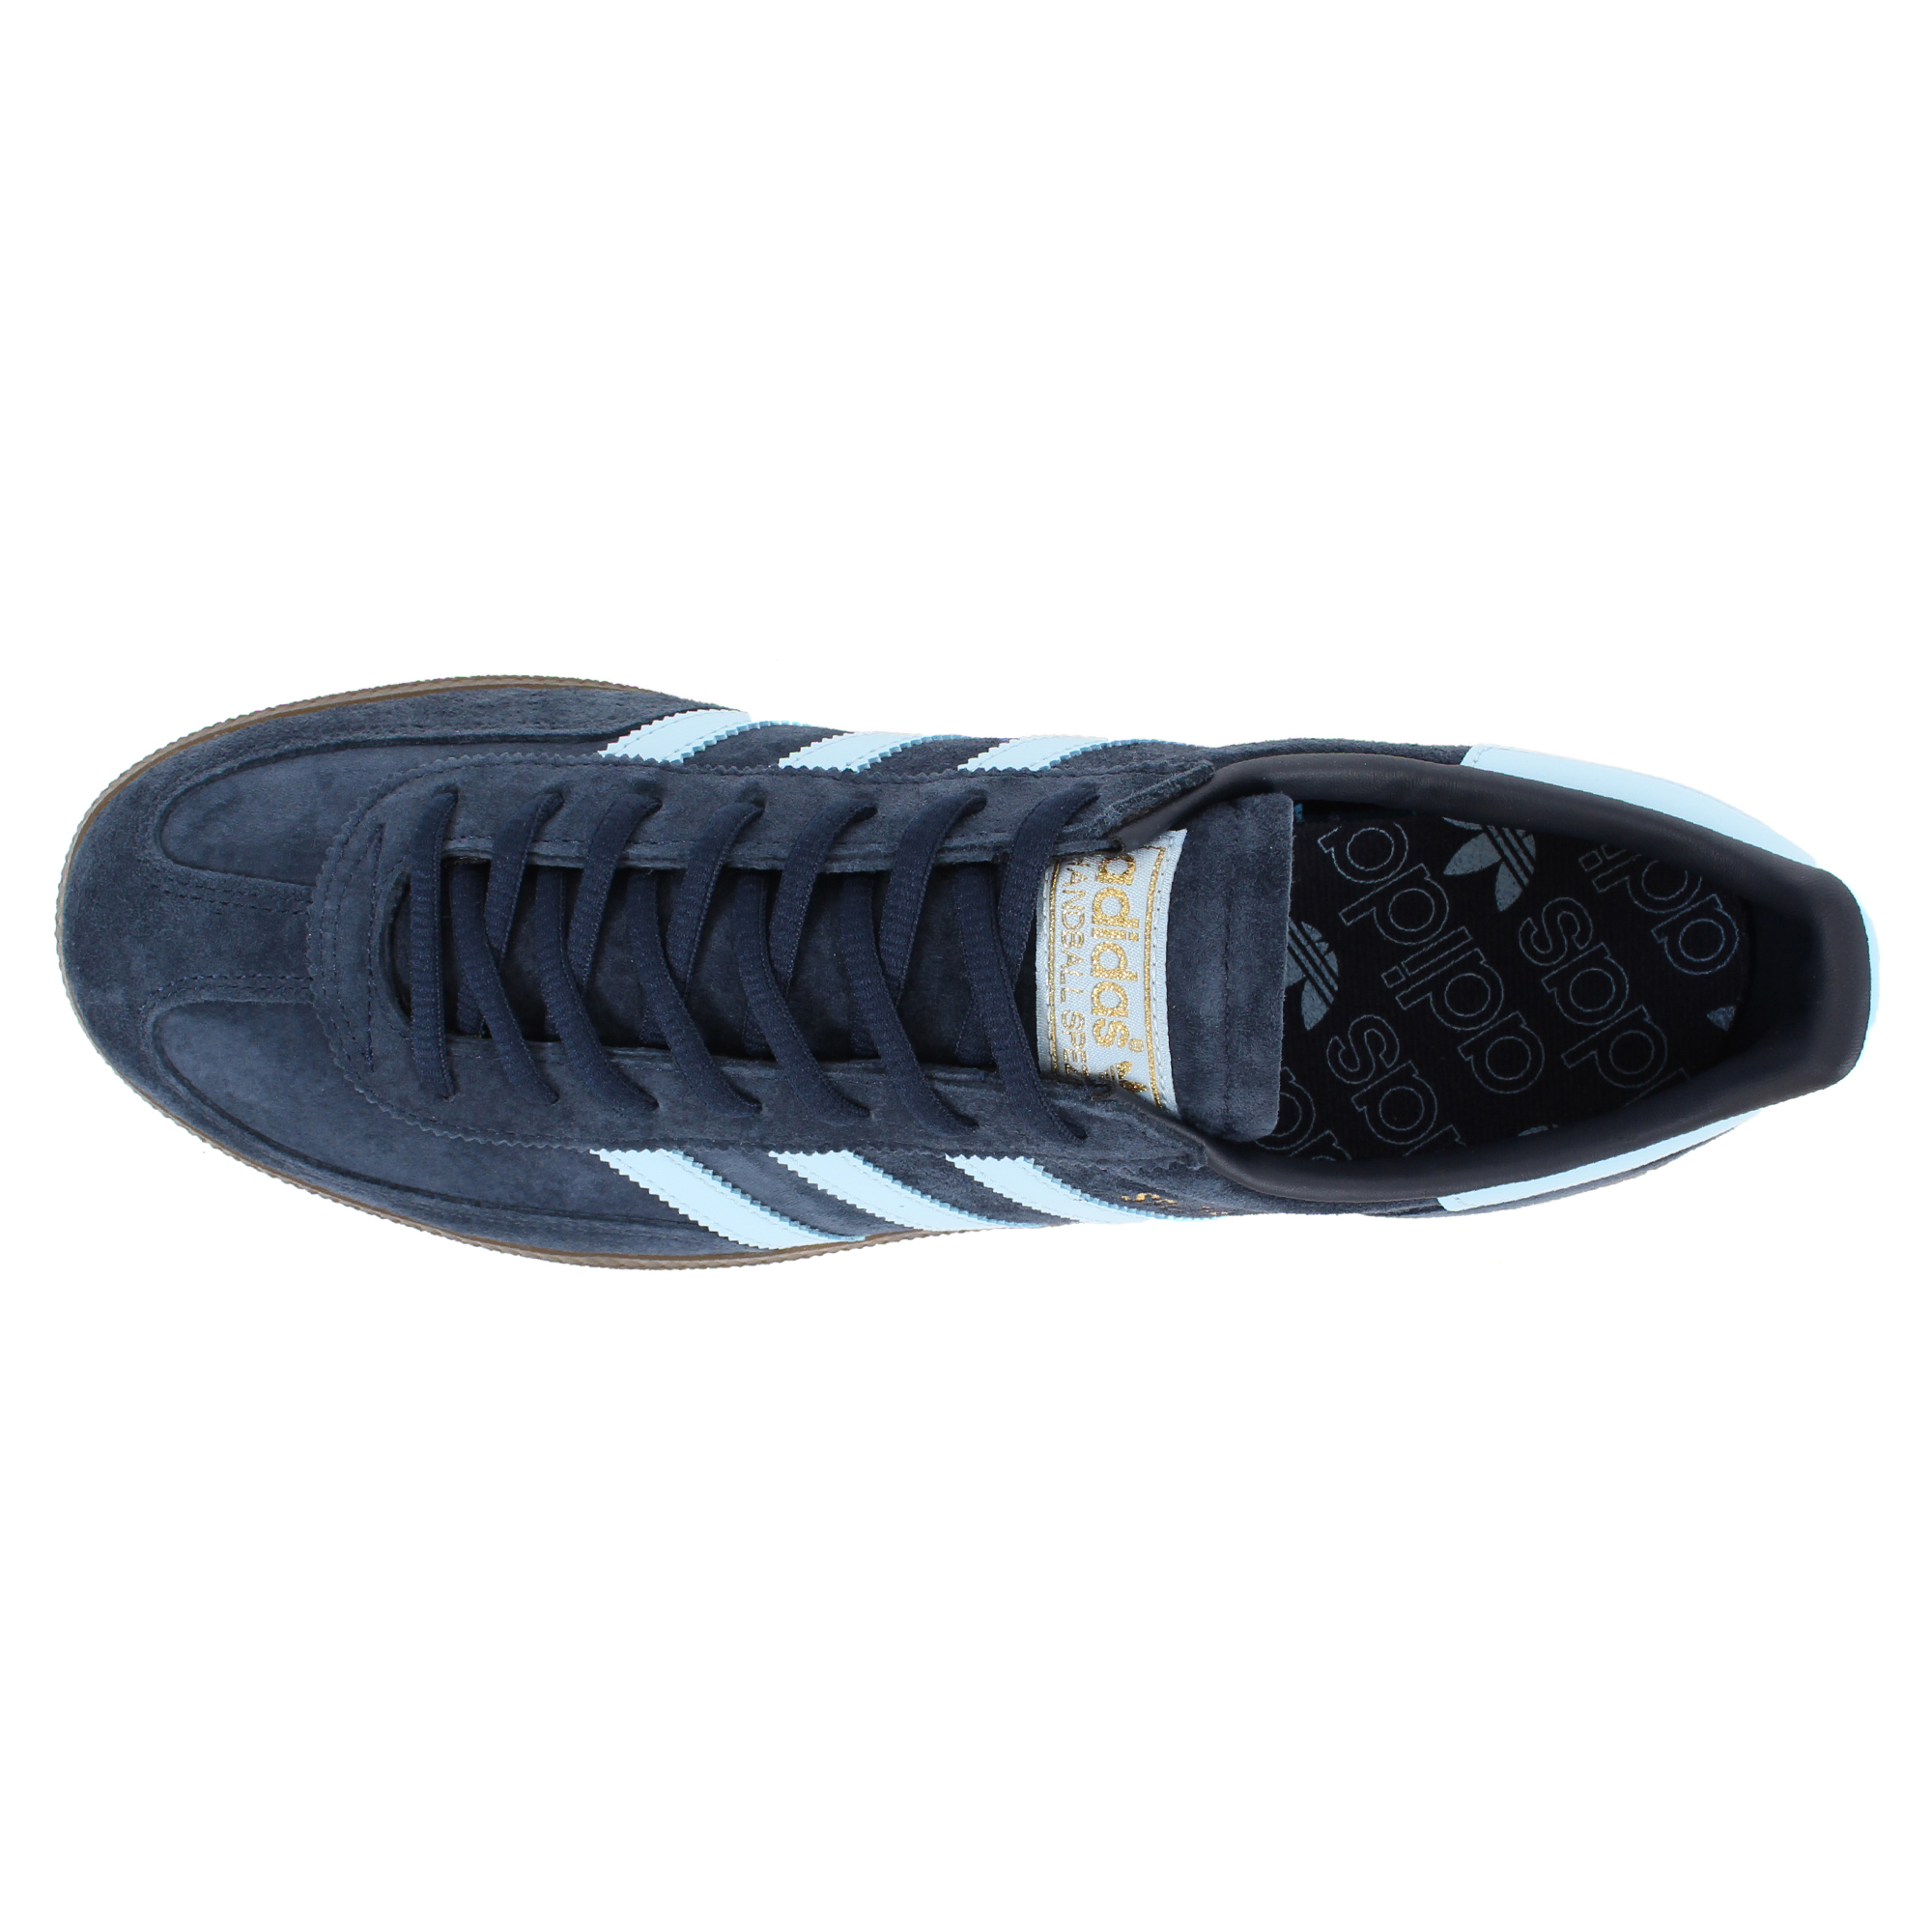 Adidas HANDBALL SPEZIAL  ブラック size 29cmサイズ29cm